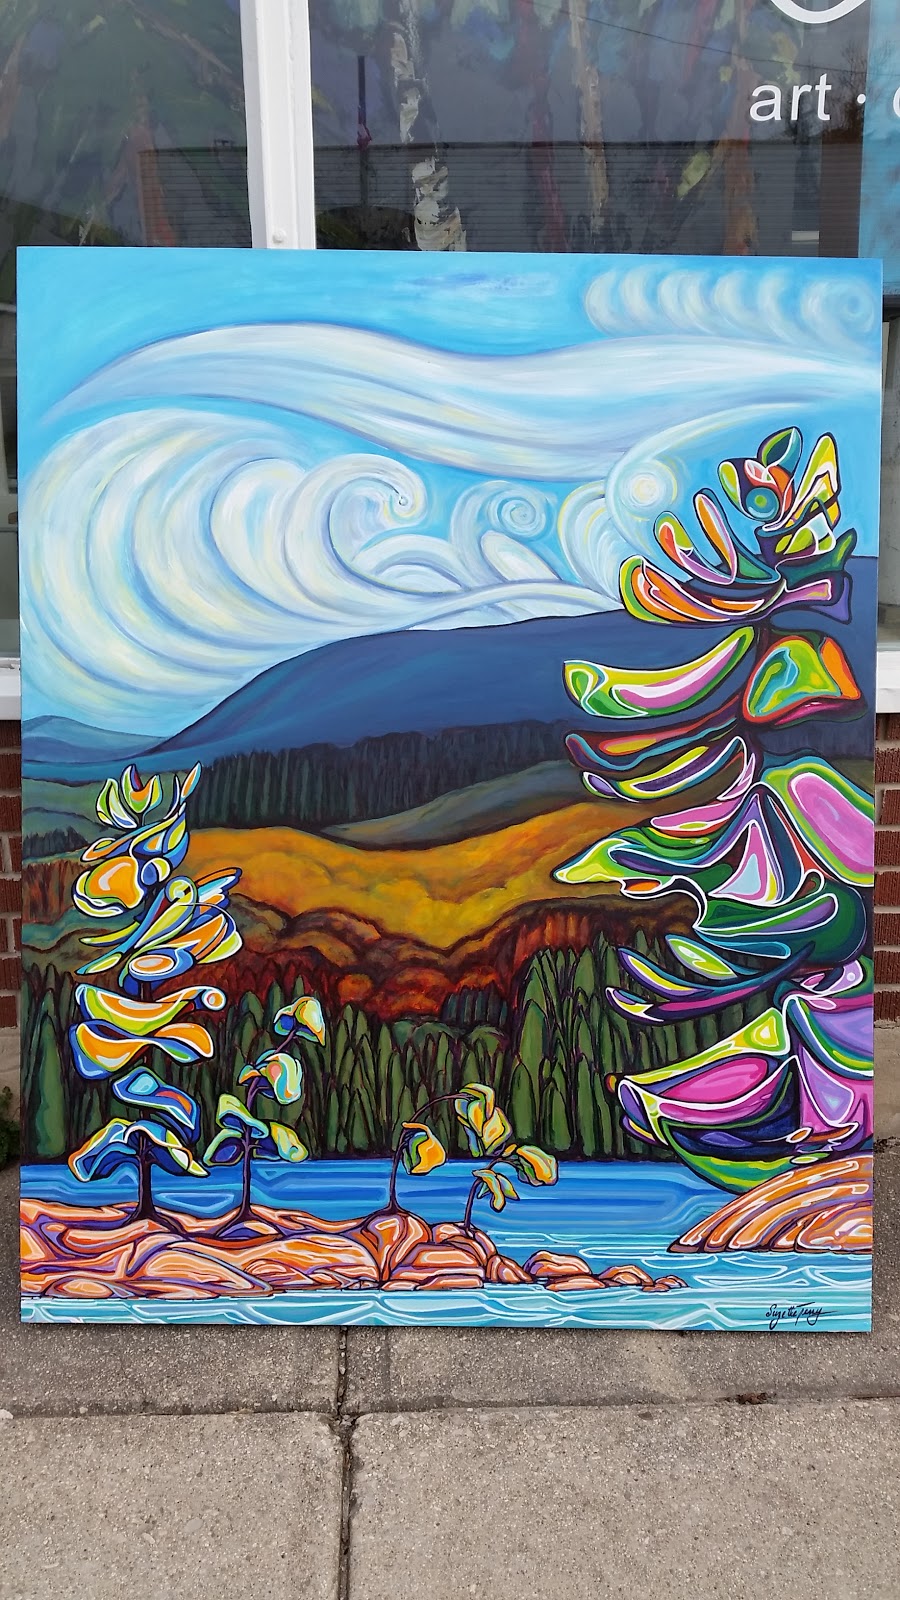 Matilda Swanson Gallery | 185 Marsh St, Clarksburg, ON N0H 1J0, Canada | Phone: (226) 665-0401